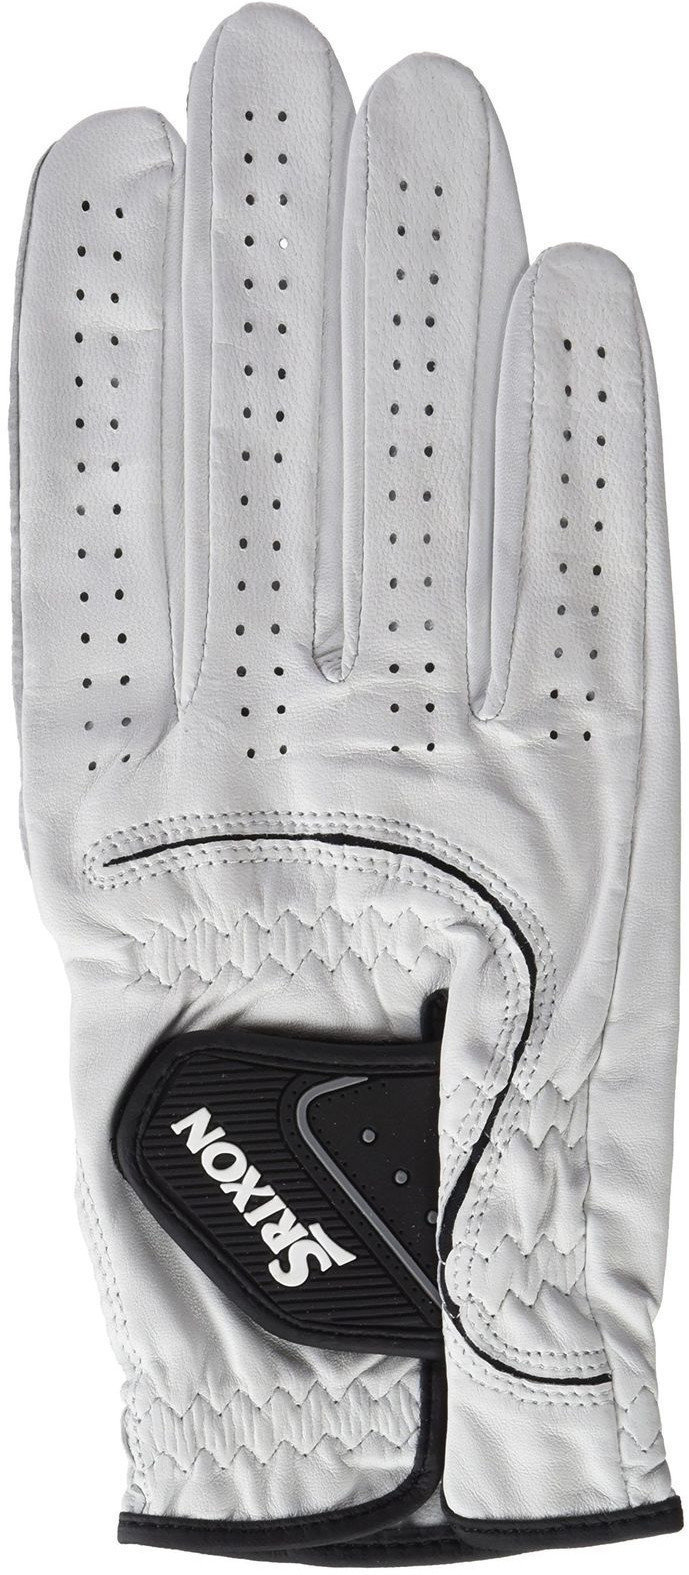 Handskar Srixon Leather Glove Wht M